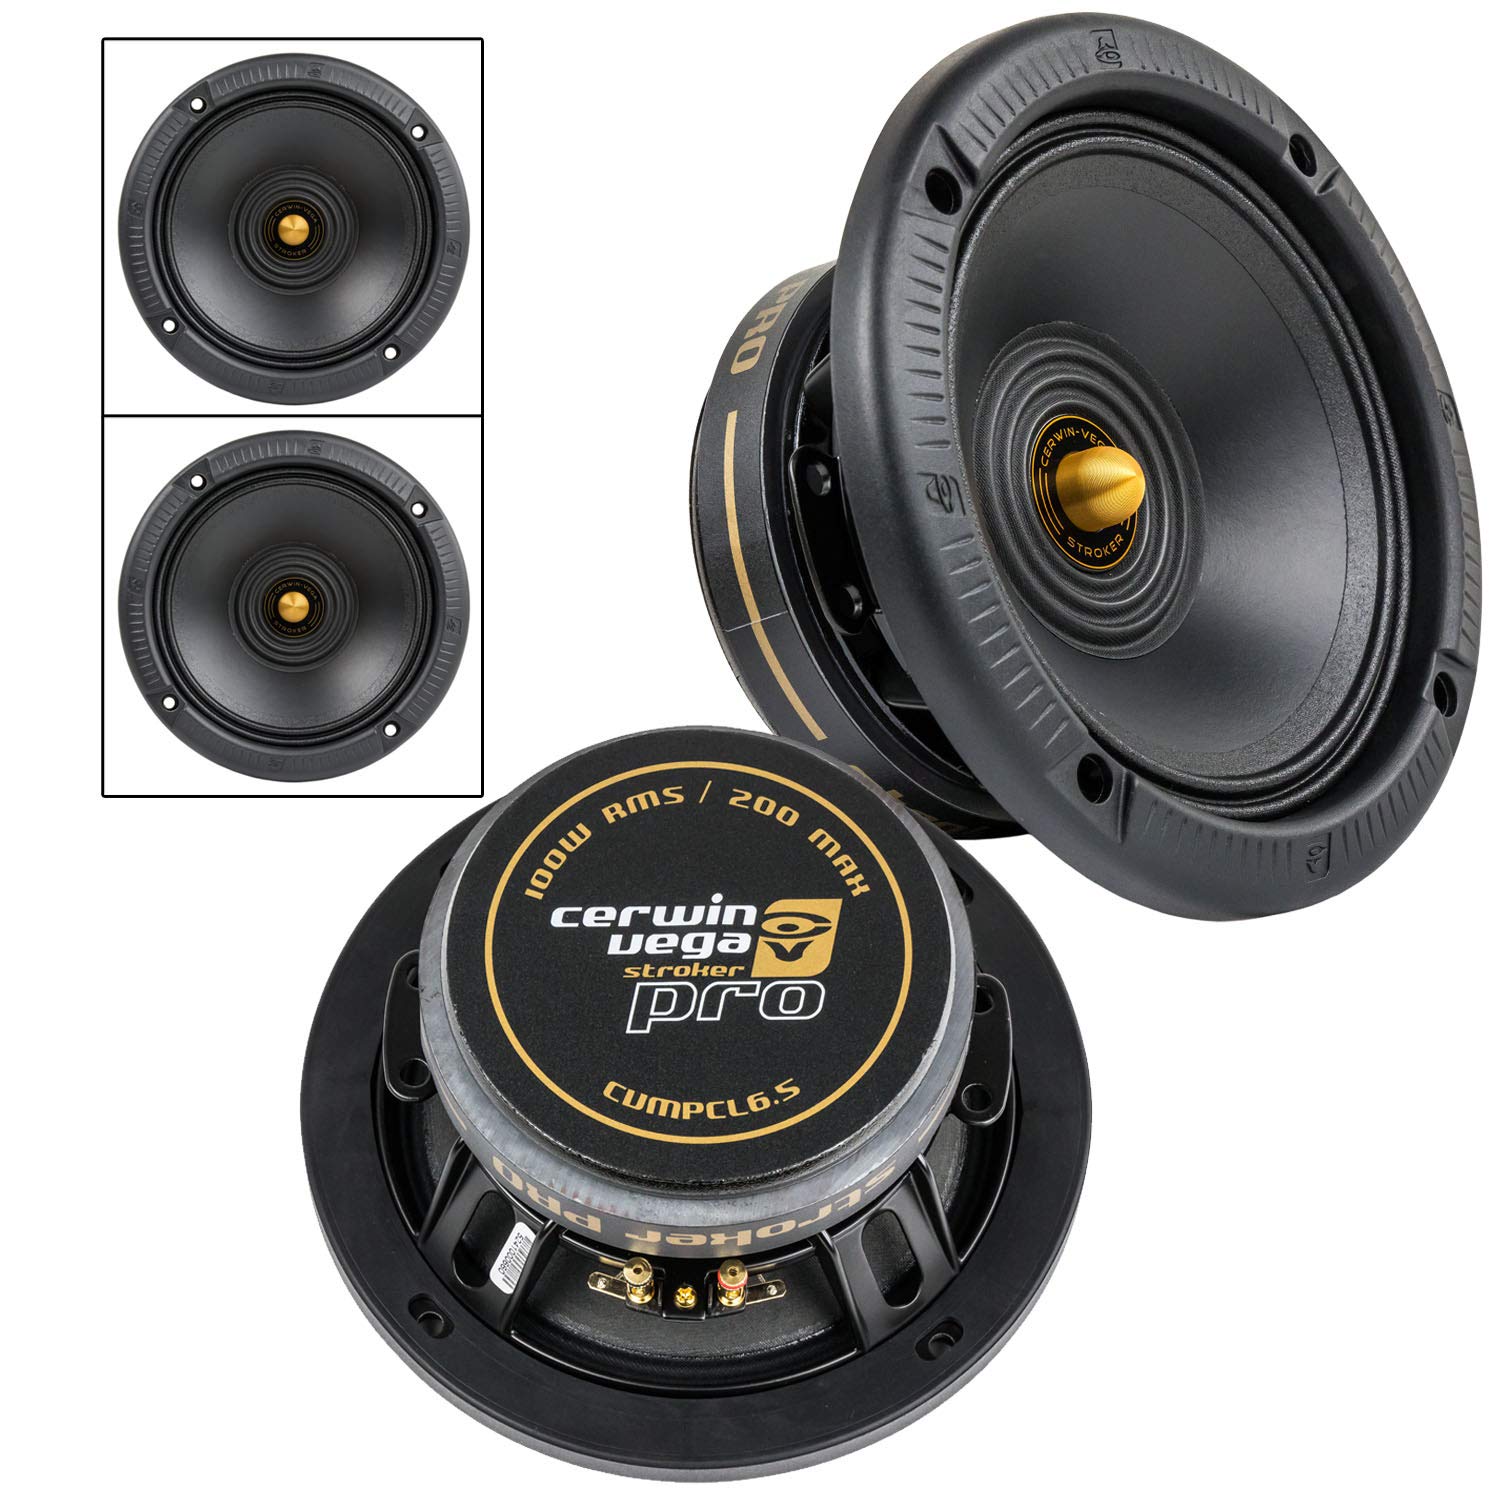 2 Pack 6.5" Full Range Speakers 200 Watts Max All Weather Car Audio CVMPCL6.5